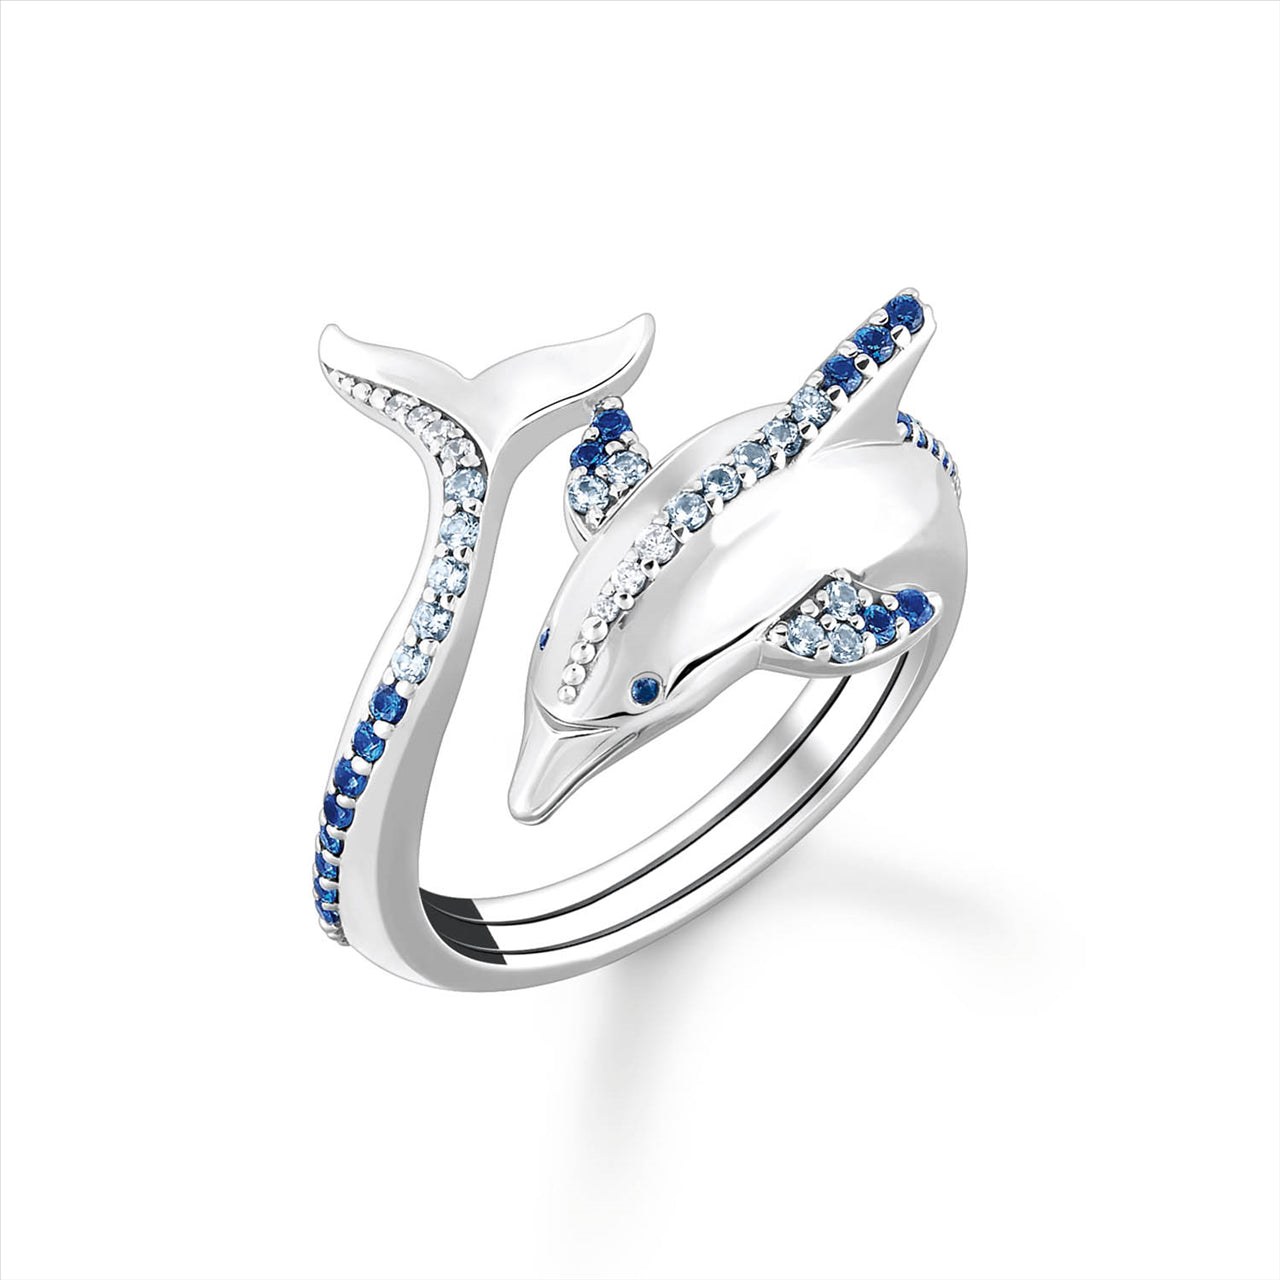 Thomas Sabo "Dolphin" Blue Stone Ring